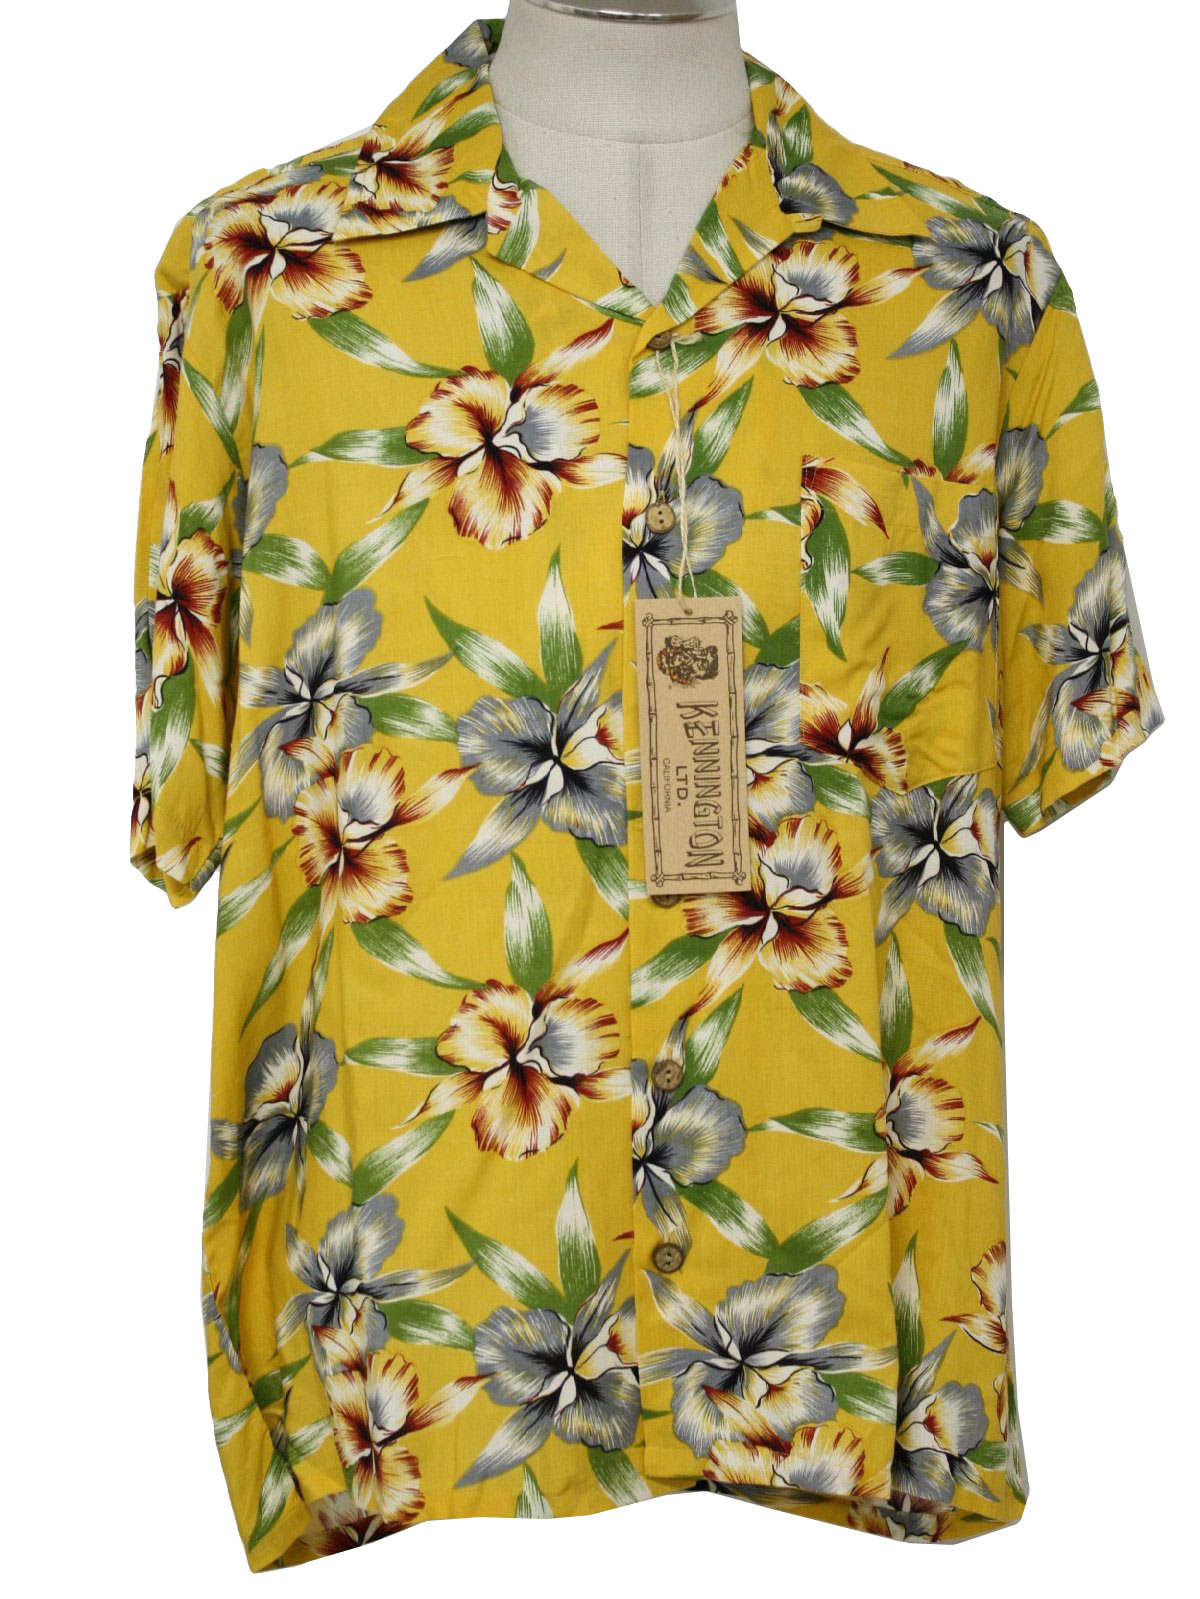 Retro Nineties Hawaiian Shirt: 90s -Kennington- Mens golden yellow with ...